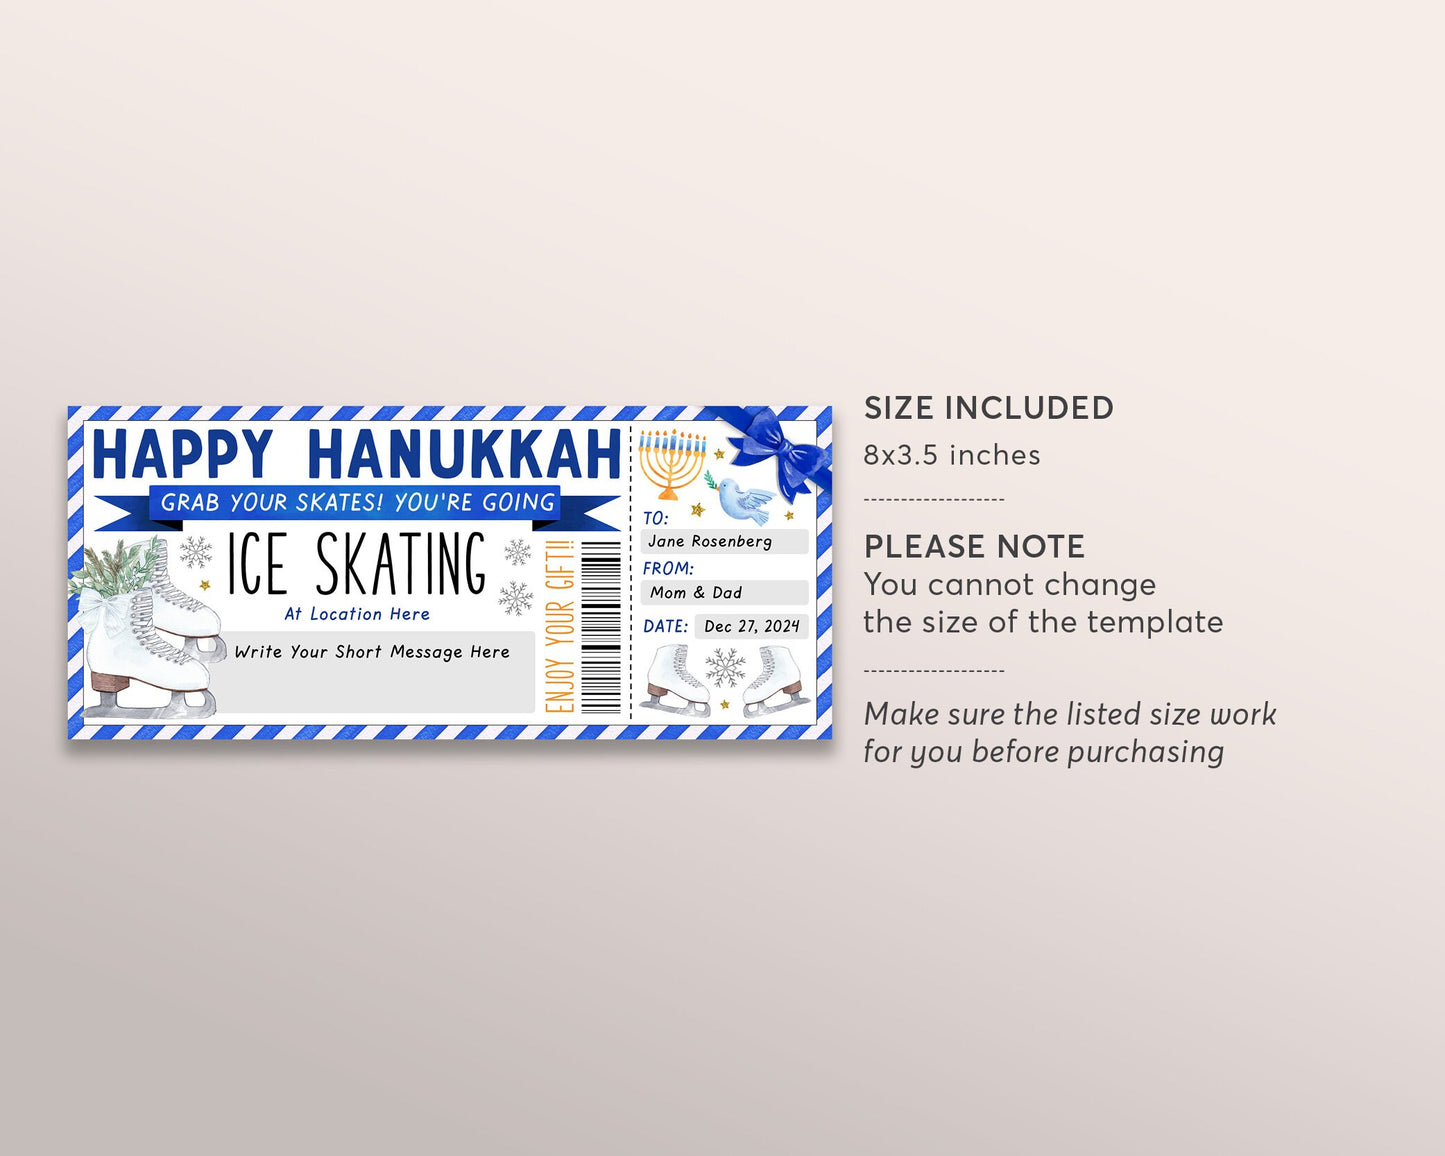 Hanukkah Ice Skating Gift Voucher Editable Template, Surprise Chanukah Skating Lessons Gift Certificate, Holiday Skating Membership Coupon